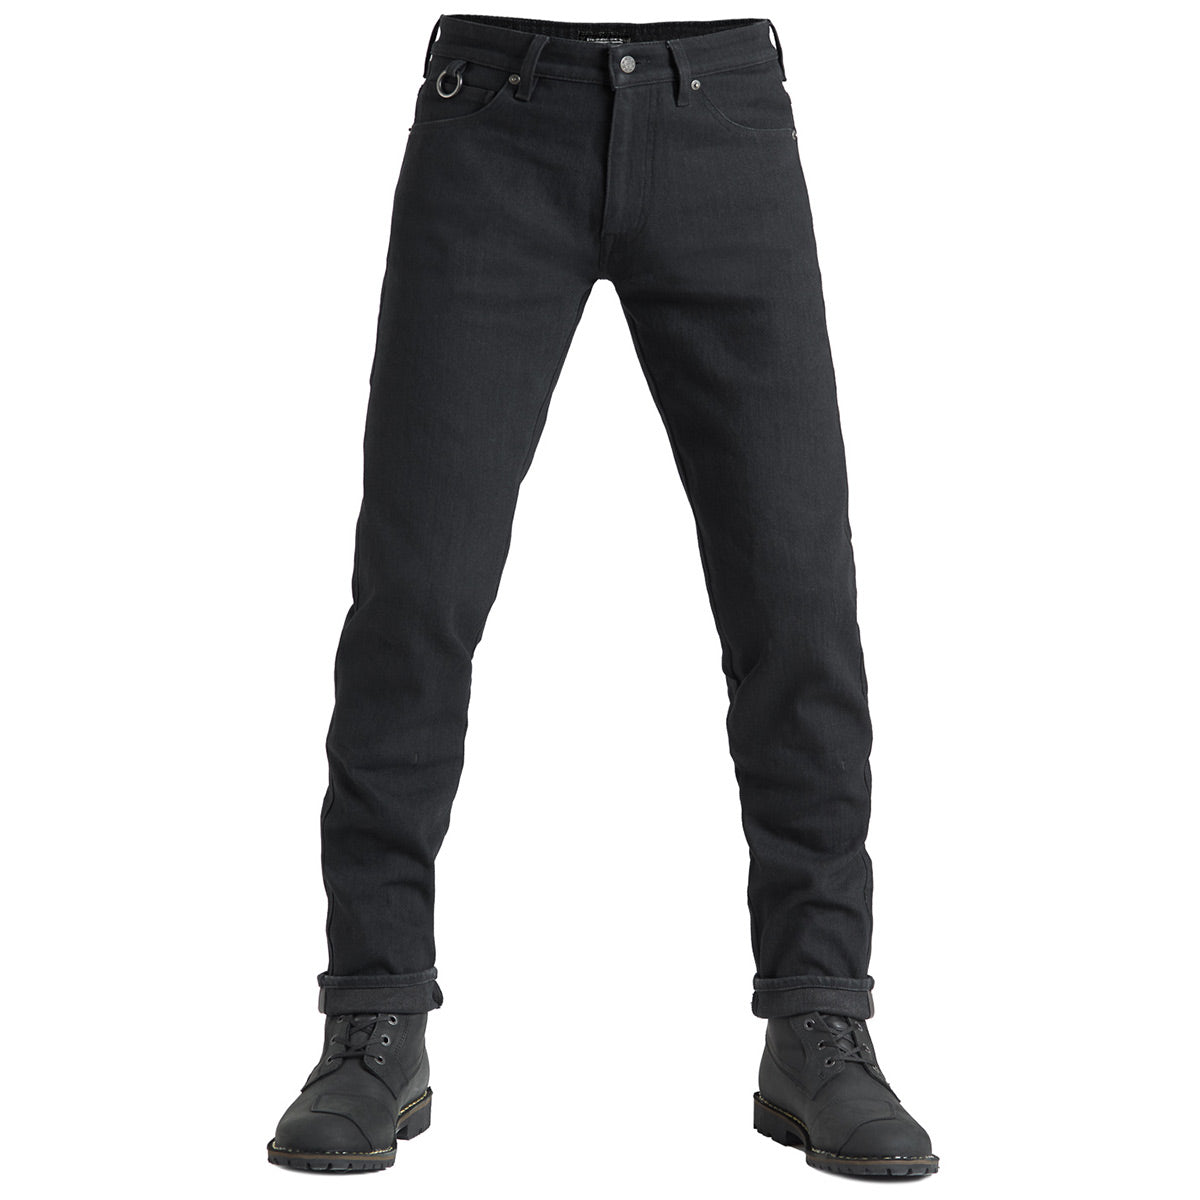 Pando Moto Steel Black 02 Men's Jeans